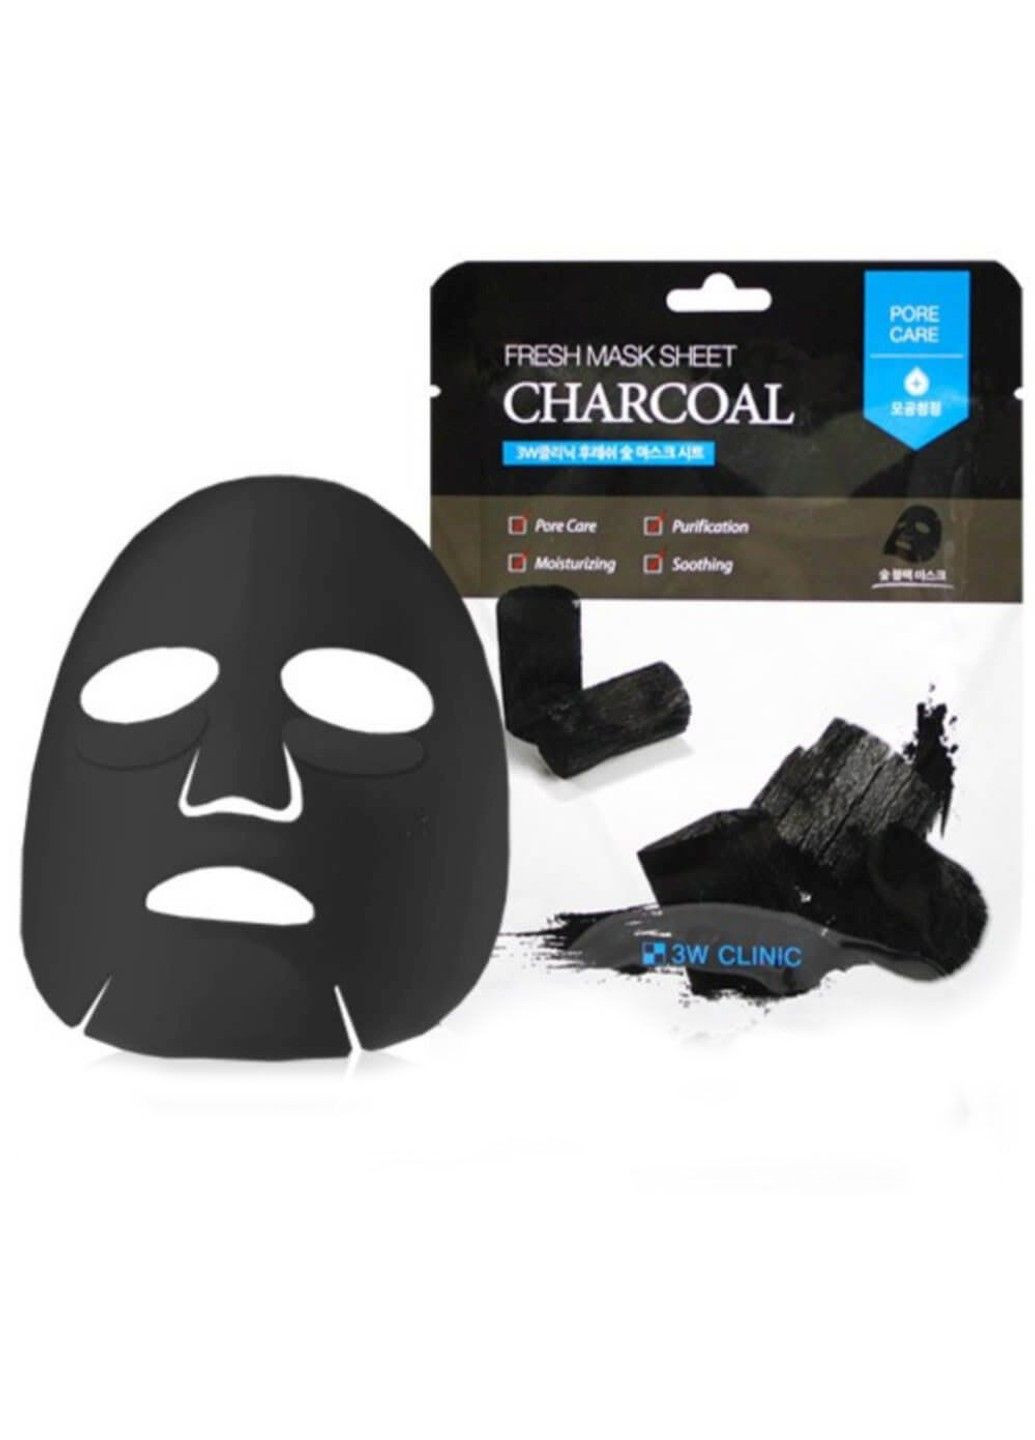 Маска для лица тканевая с древесным углем Fresh Charcoal Mask Sheet, 1 шт 23 мл 3W Clinic (285813651)